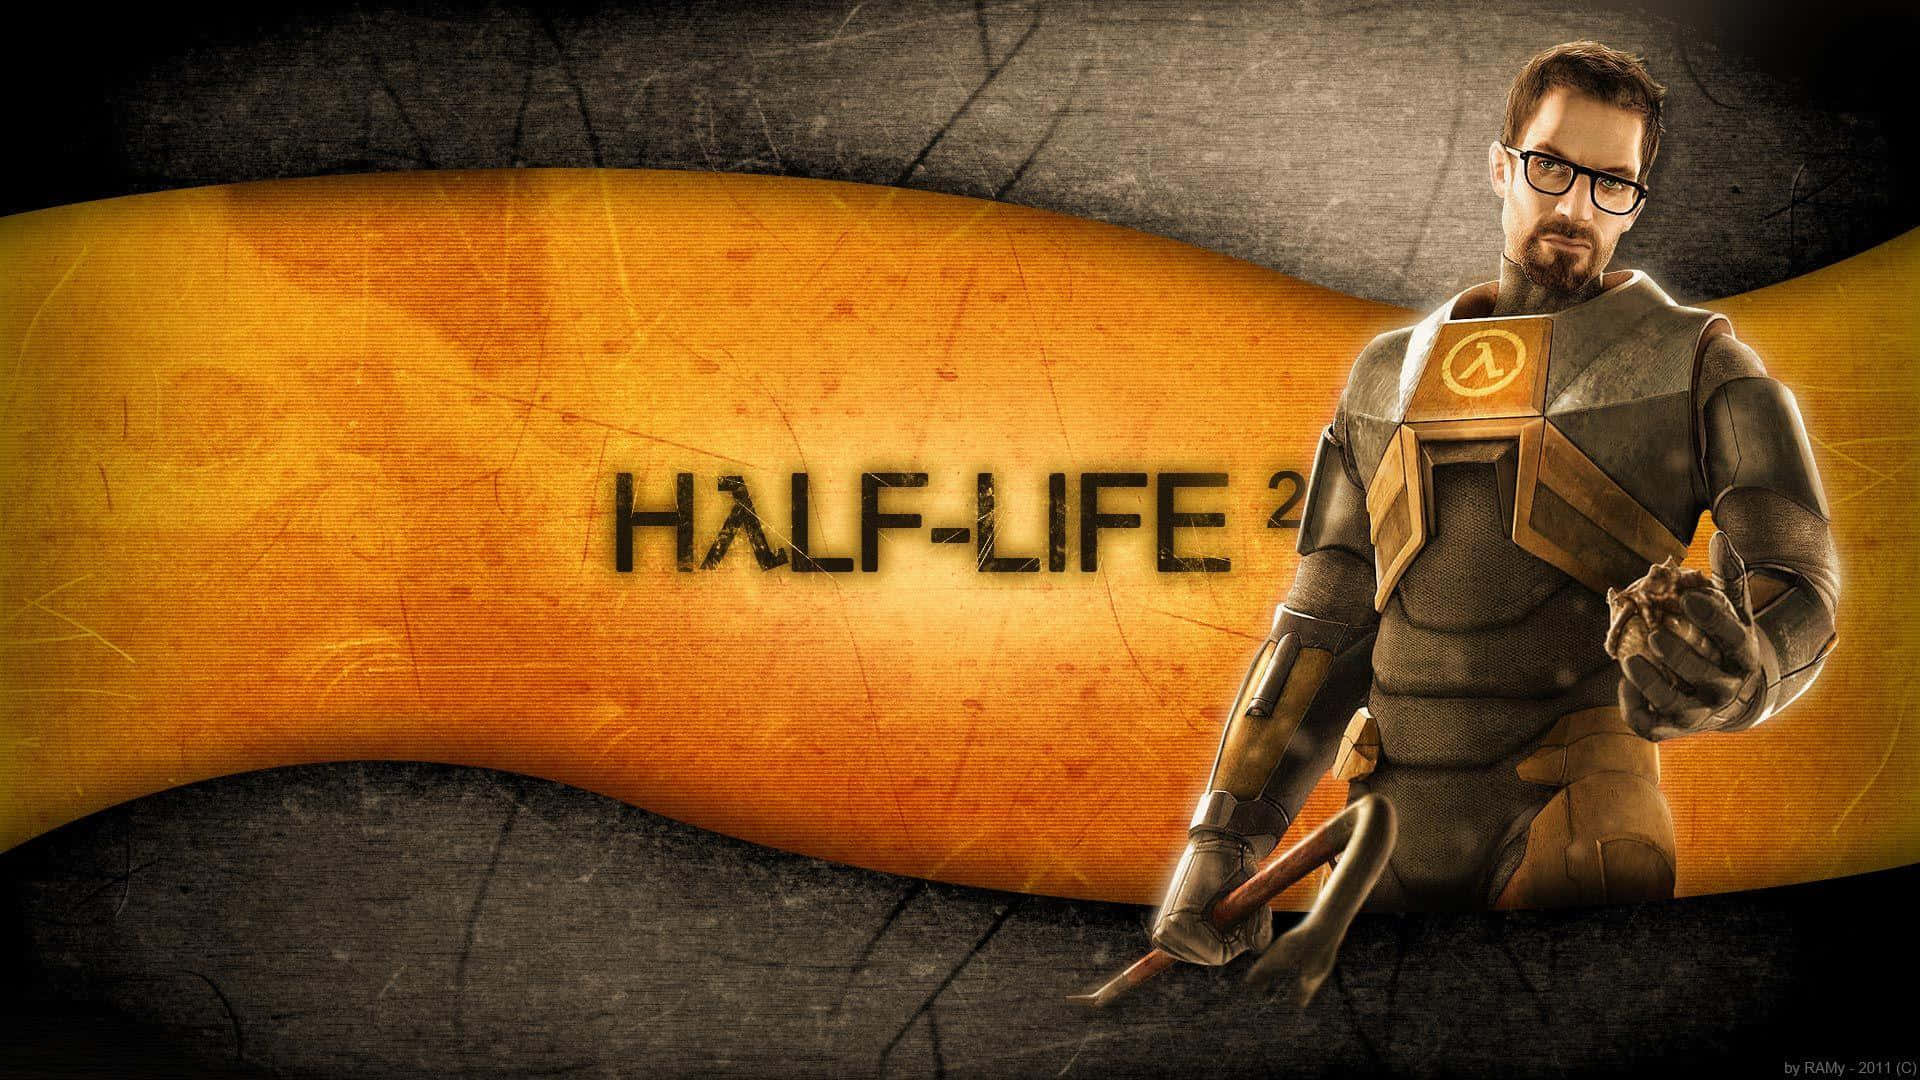 Explore City 17 and uncover the secrets of Half-Life 2 Wallpaper